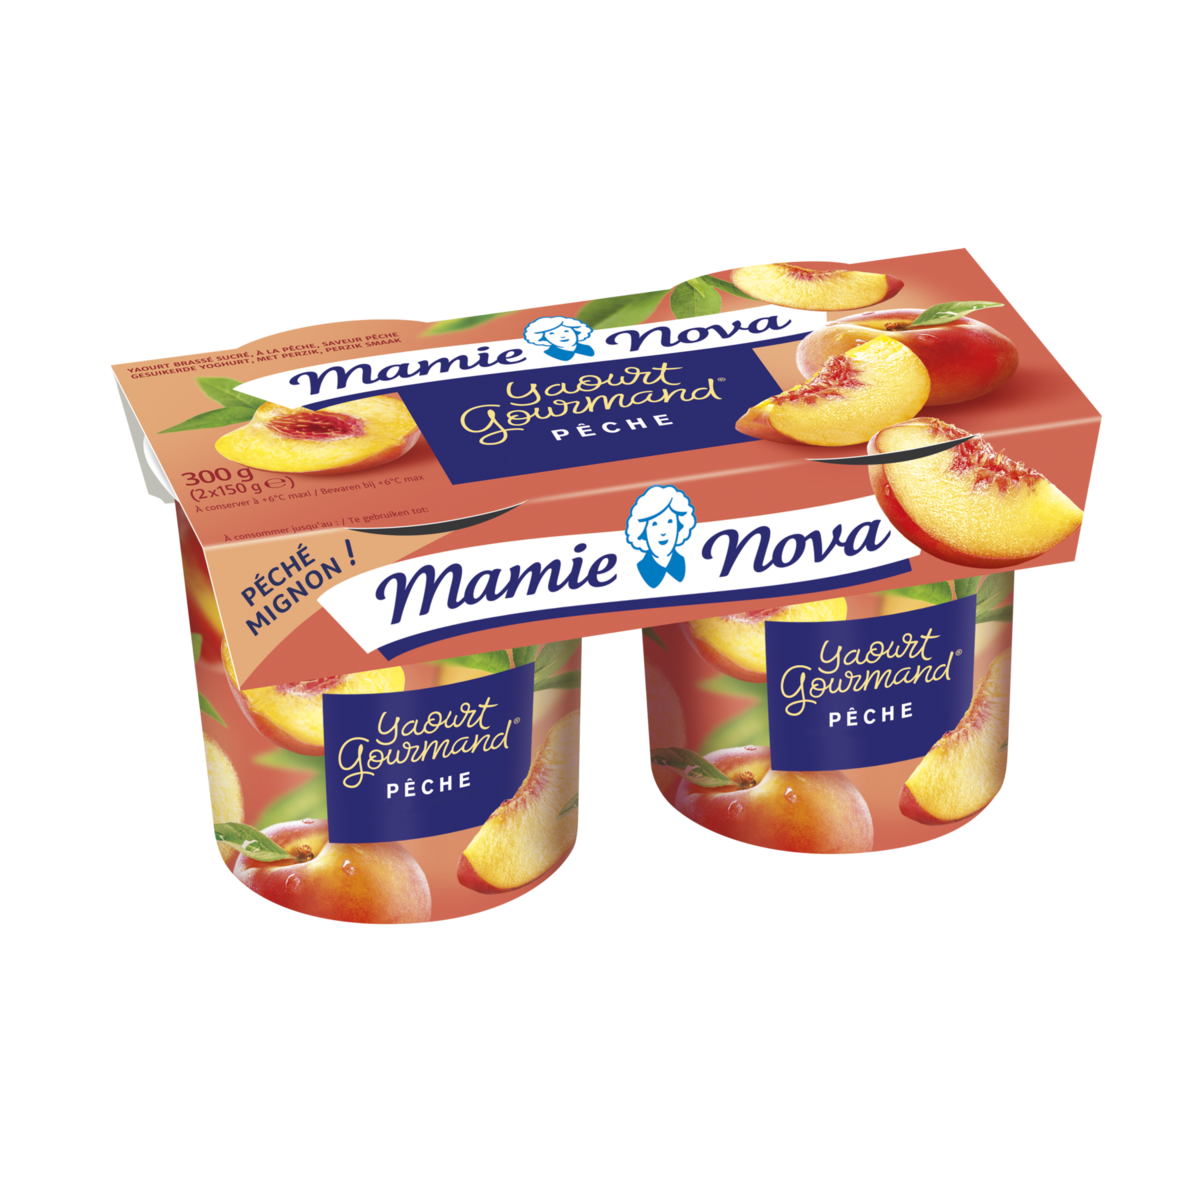 Mamie Nova Peach yoghurts 2x150g